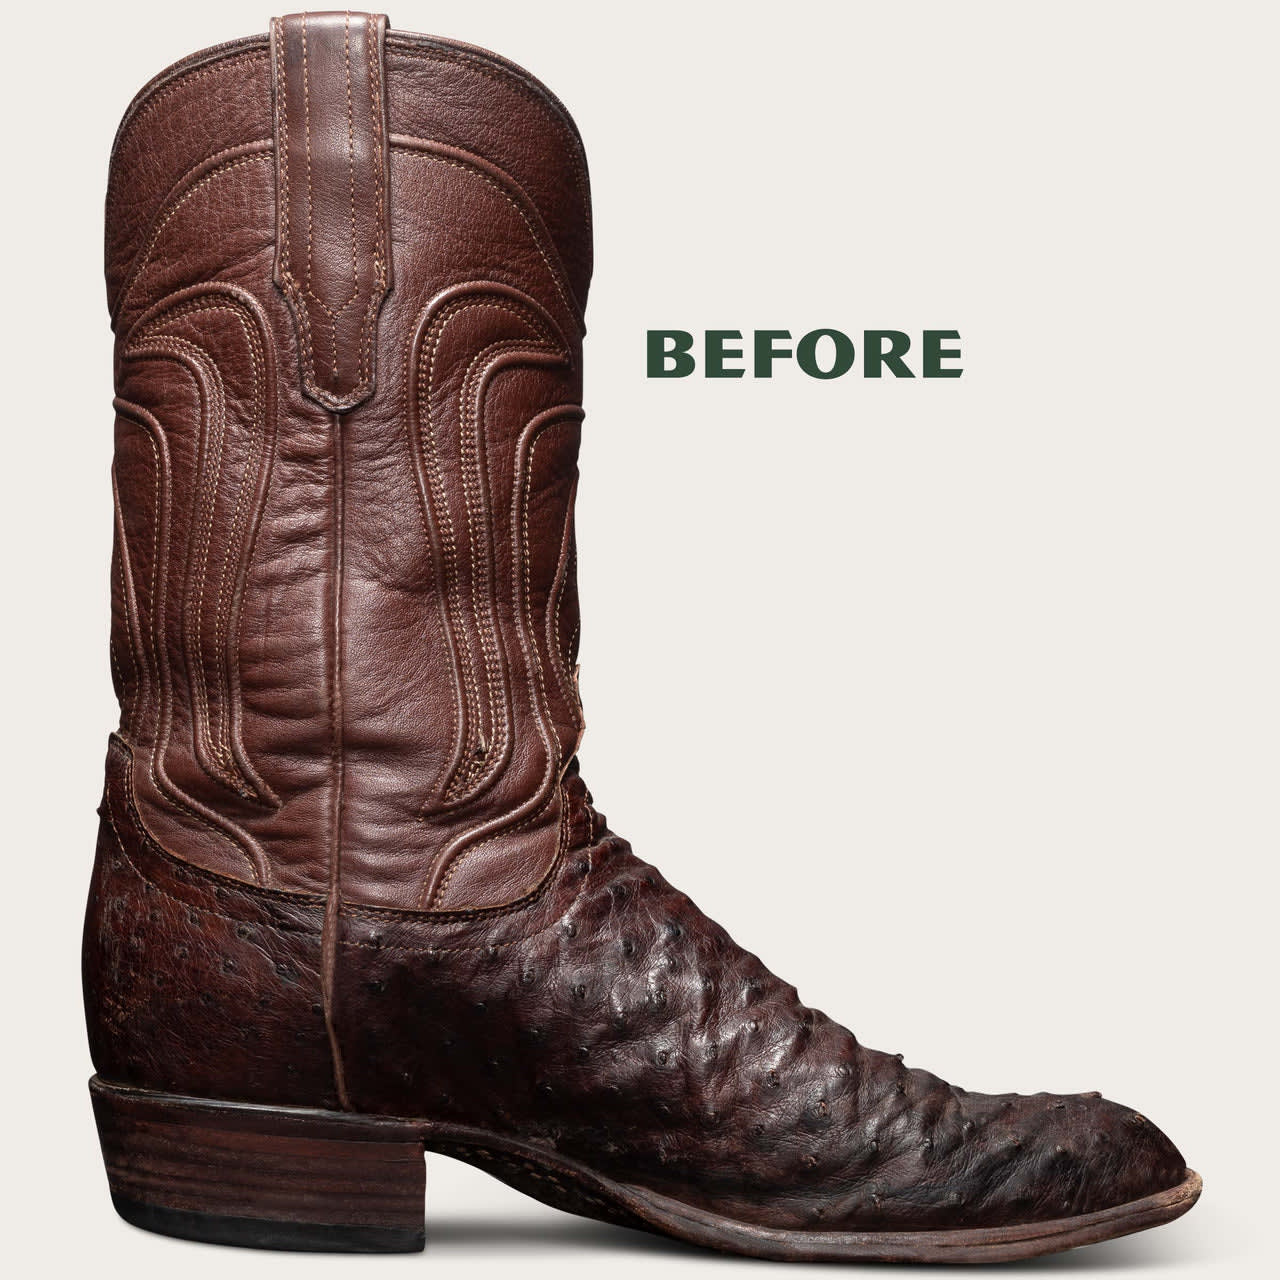 Boot Restoration - Label